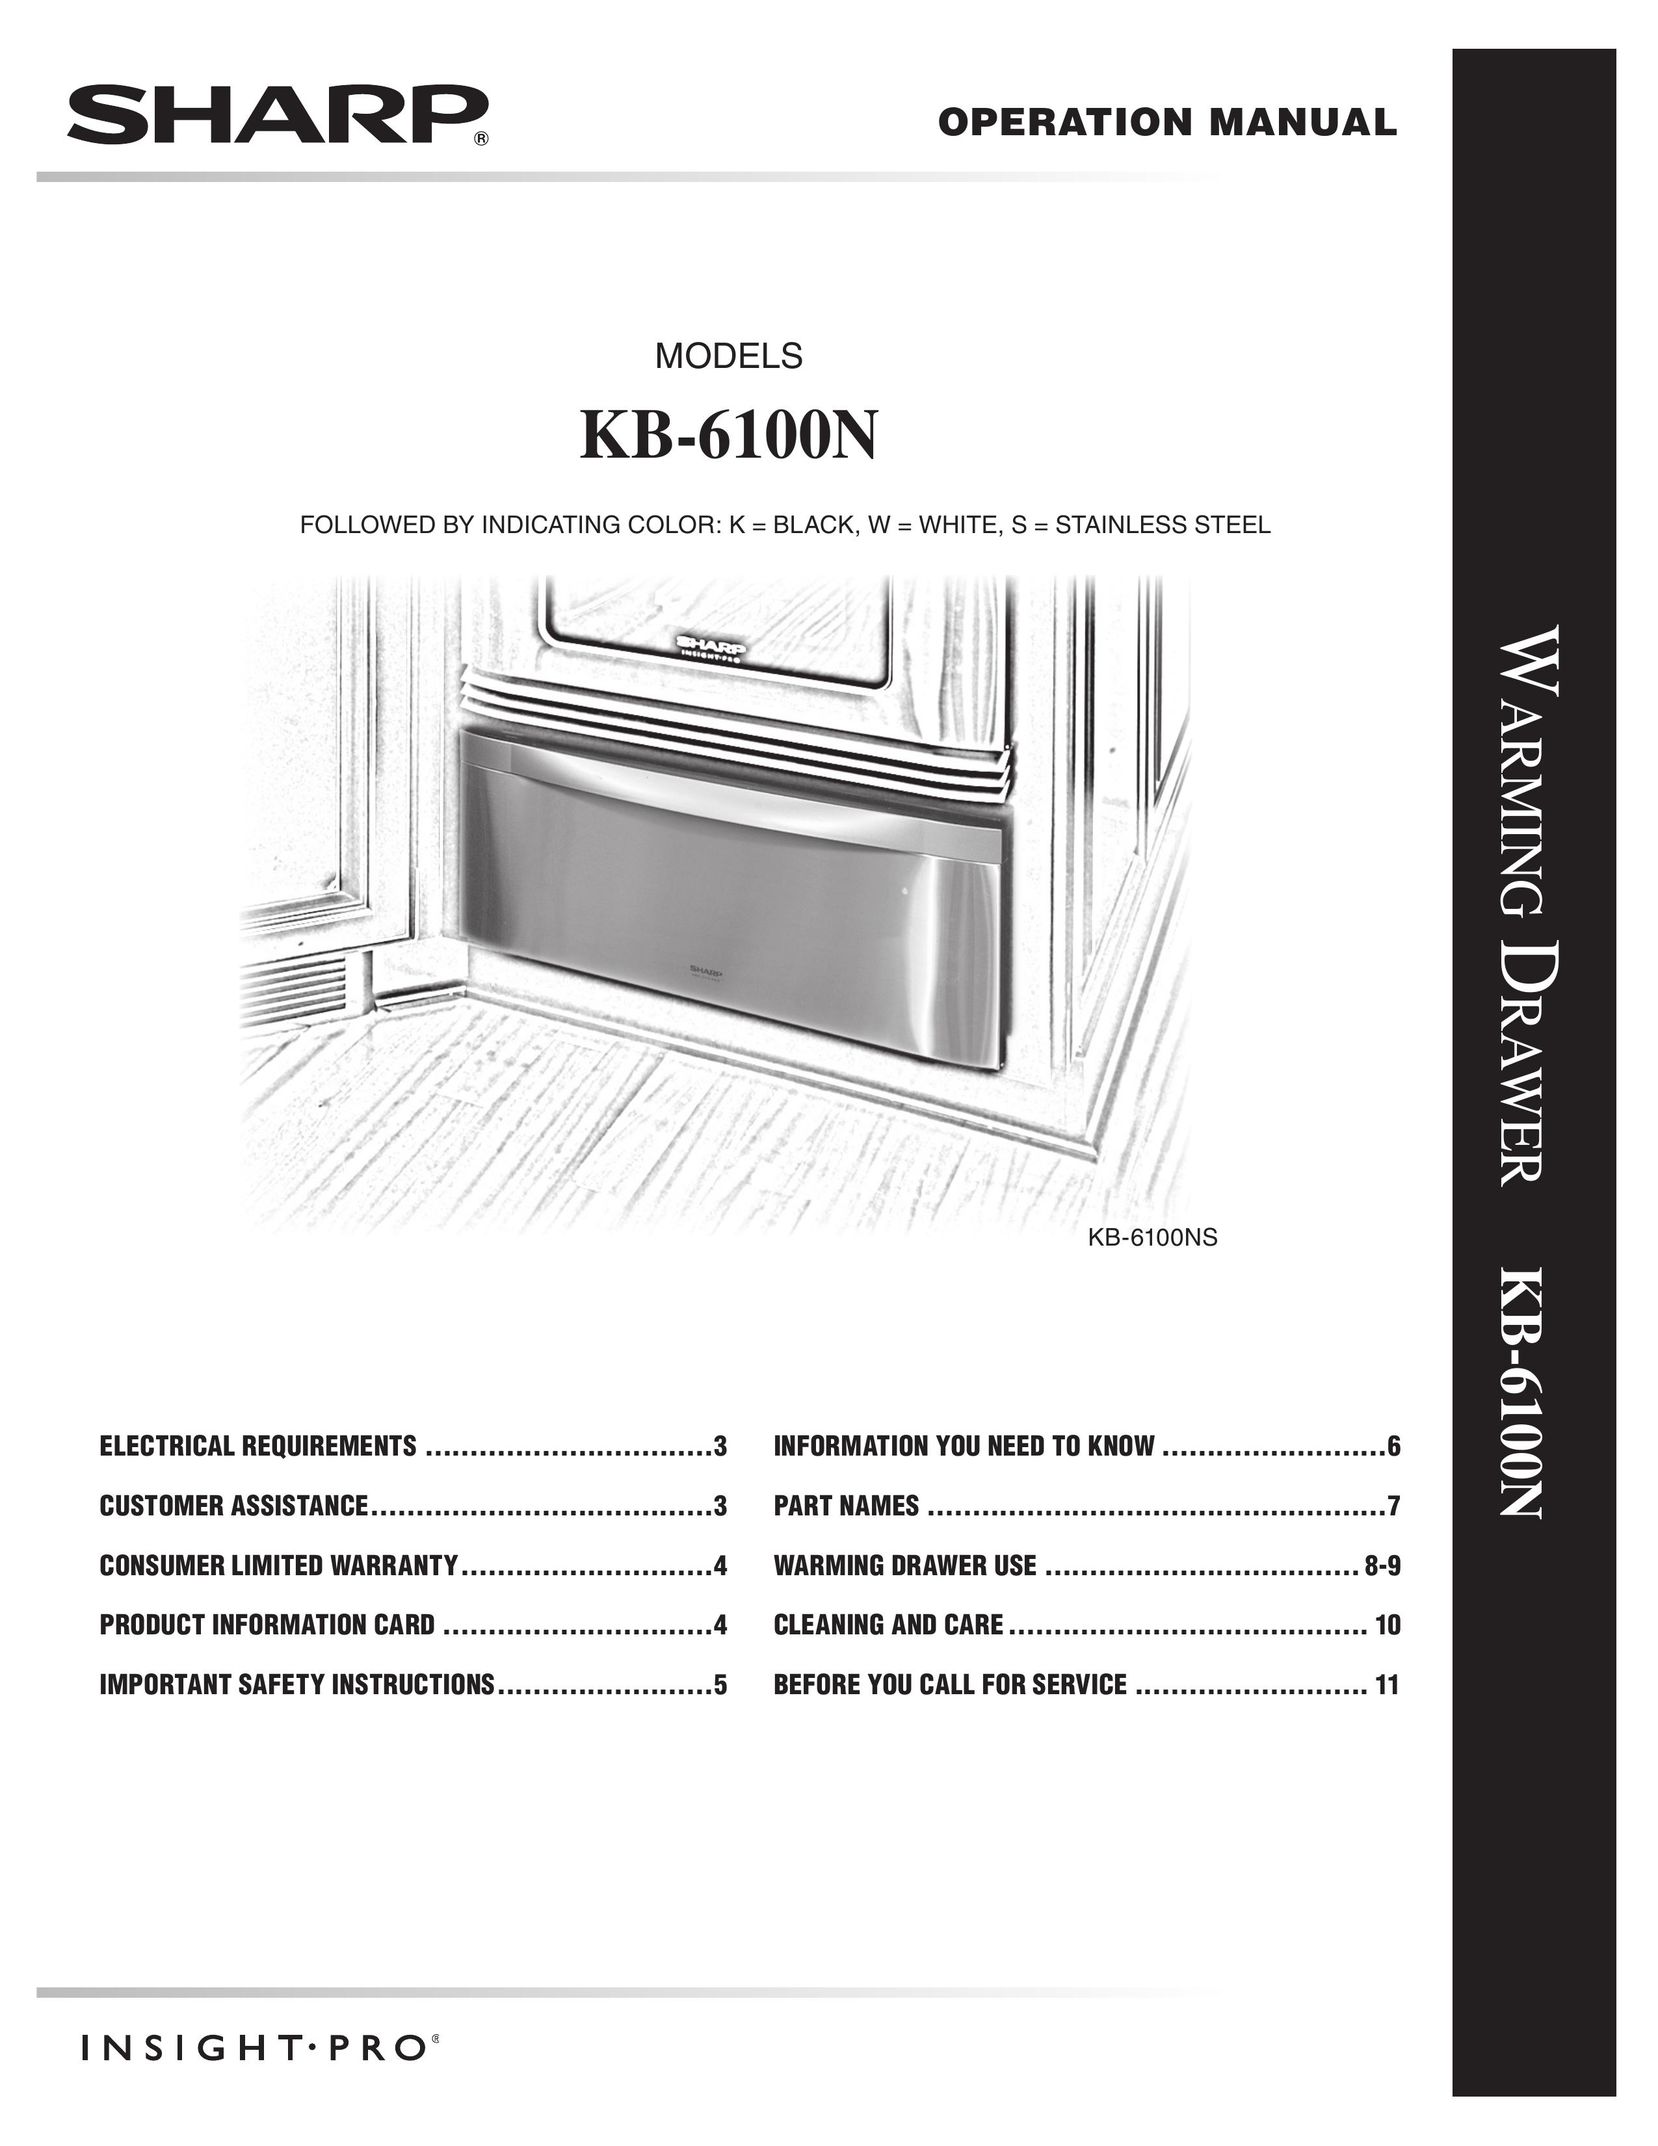 Sharp KB-6100NK Food Warmer User Manual